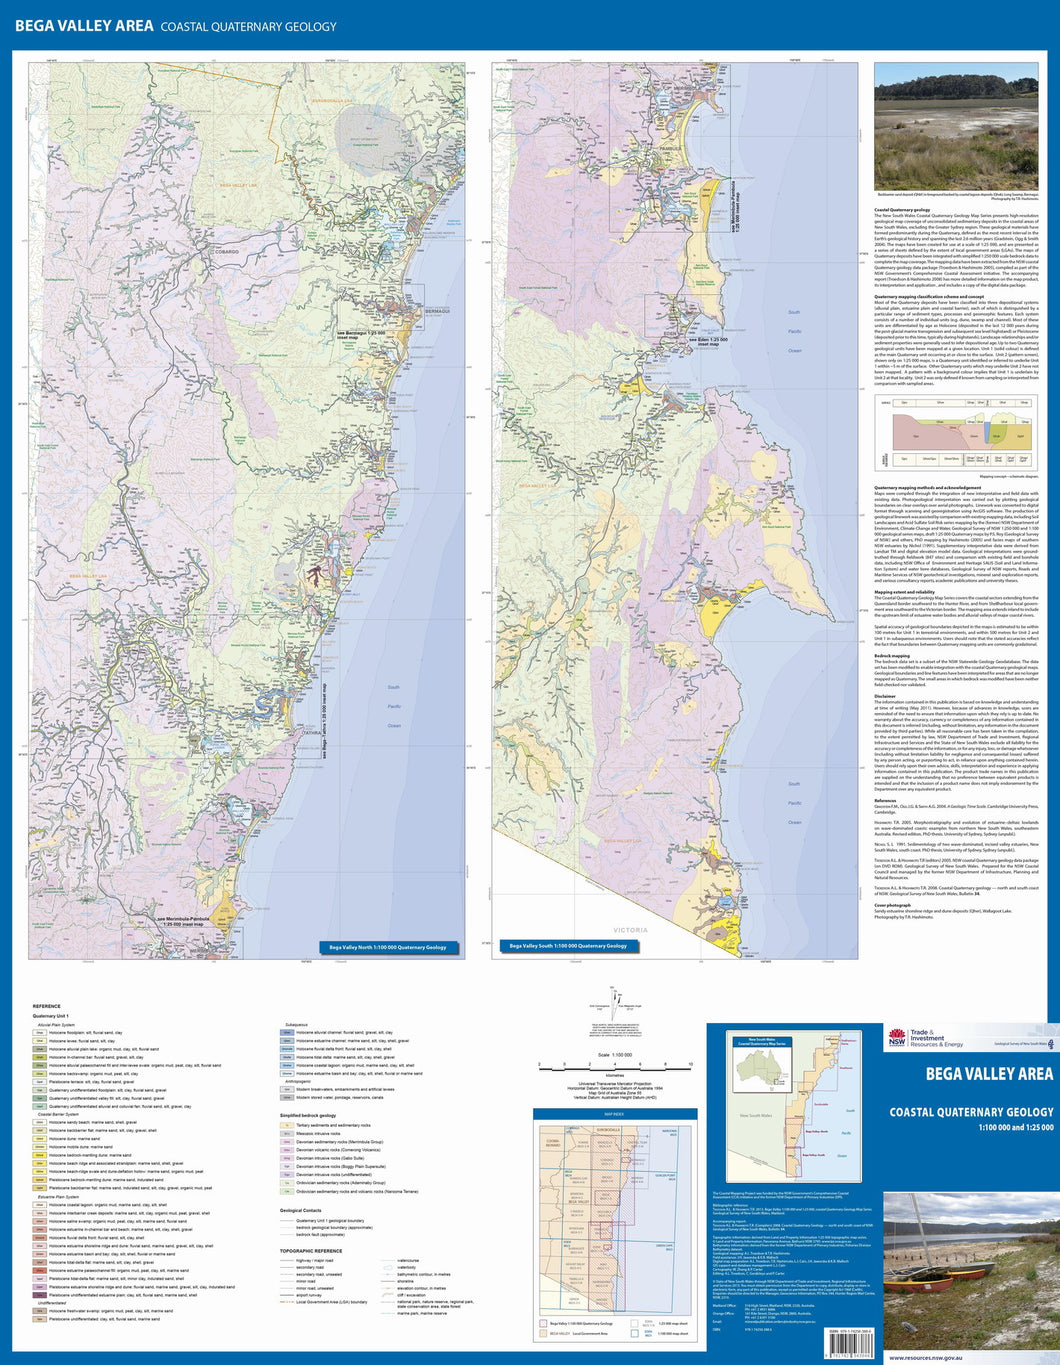 Image of Bega Valley Area Coastal Quaternary Geology map